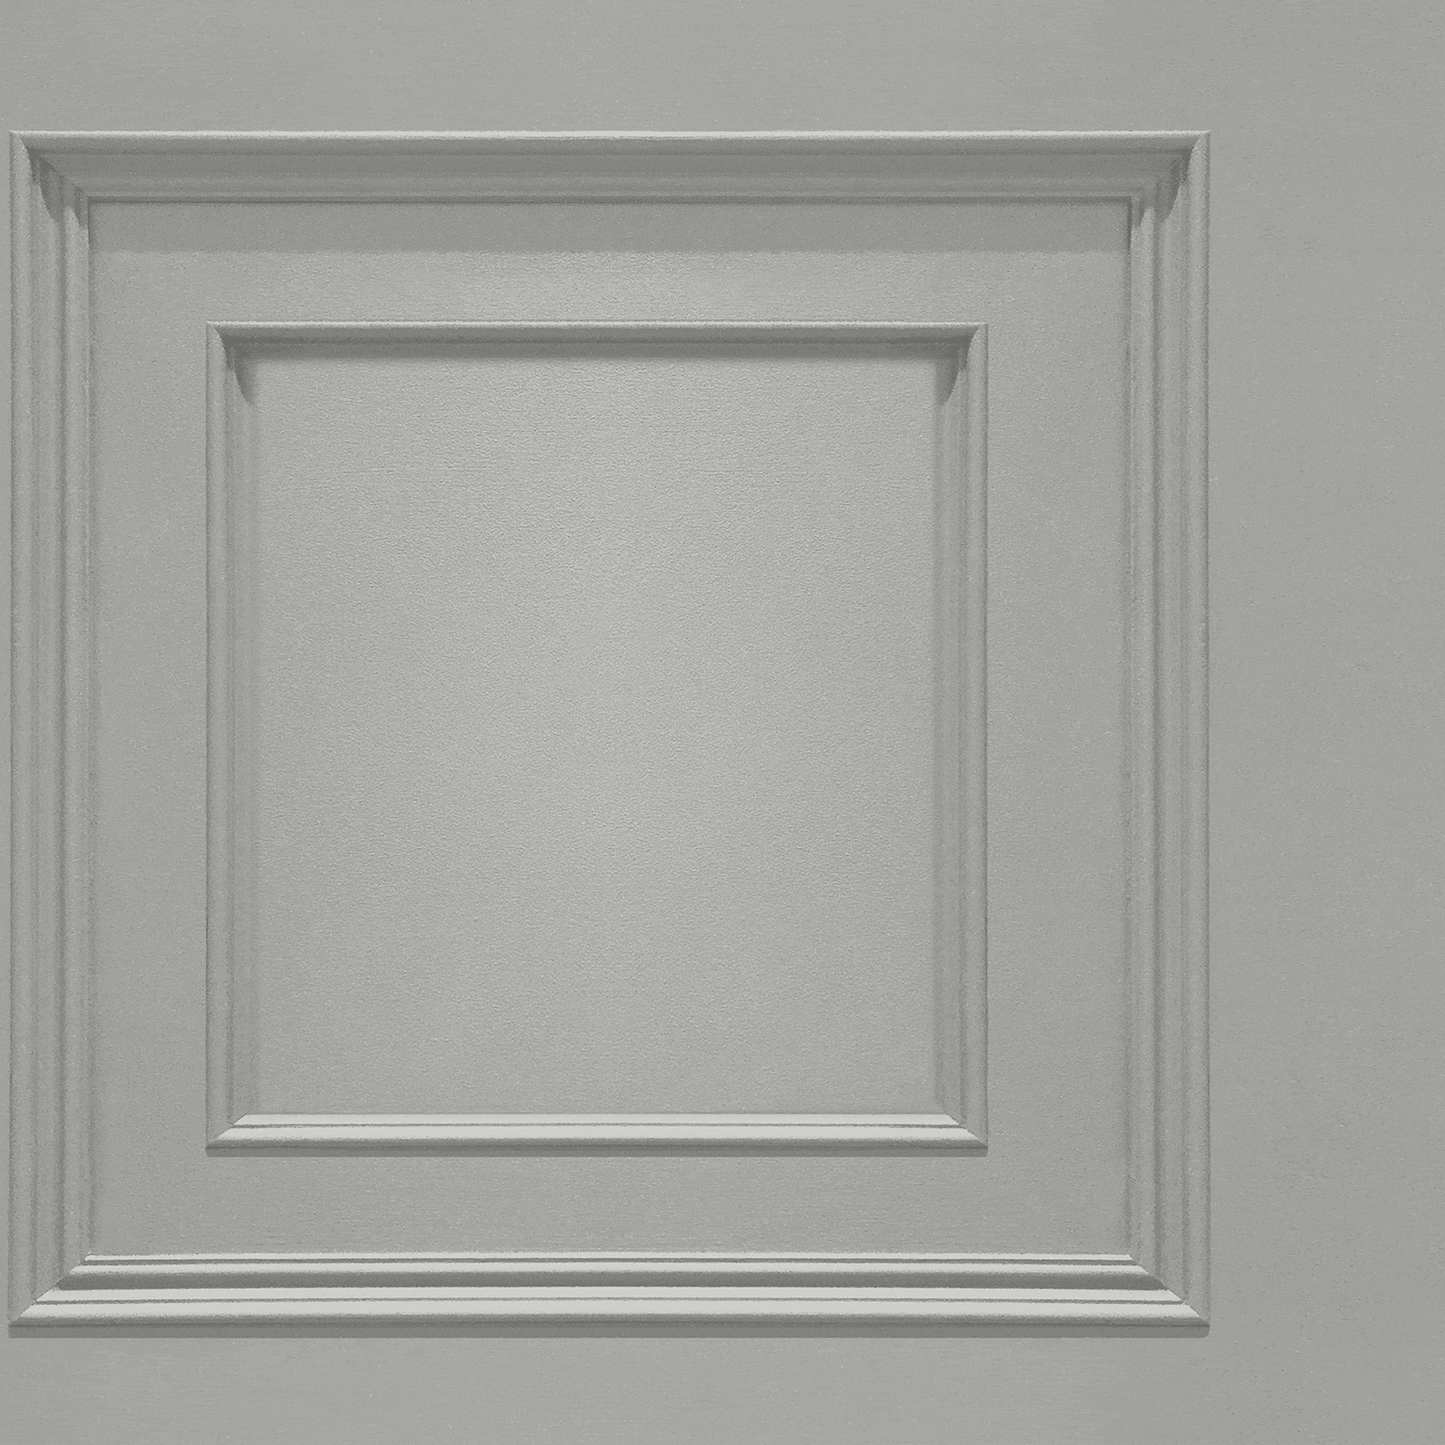 Wallpaper  -  Belgravia Oliana Grey Panel Wallpaper - 8492  -  50156263